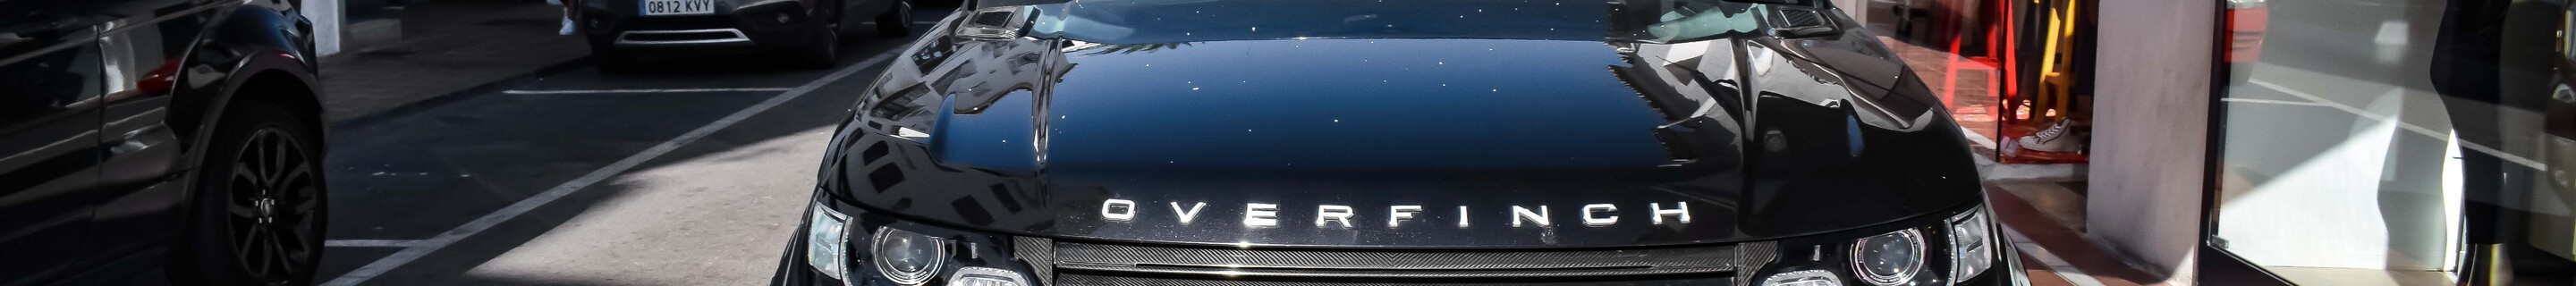 Land Rover Range Rover Overfinch GT SVR